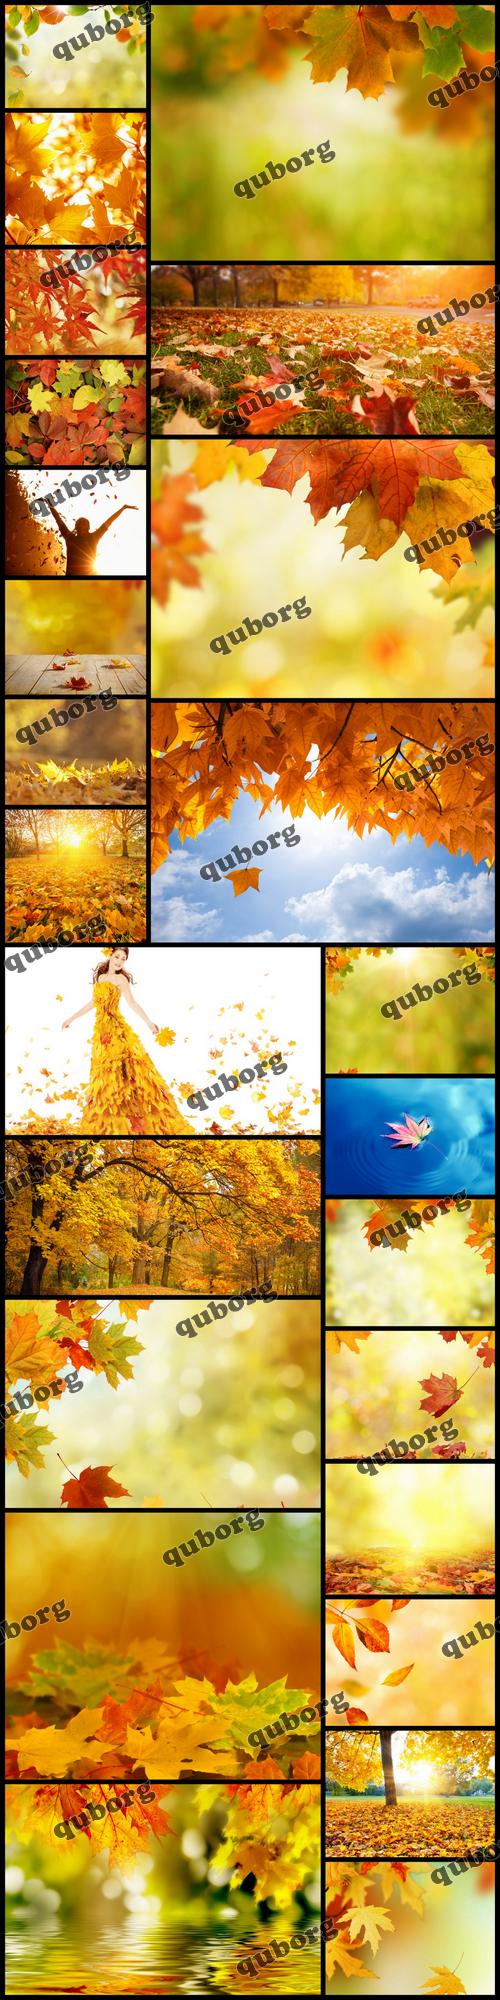 Stock Photos - Autumn Leaves 2